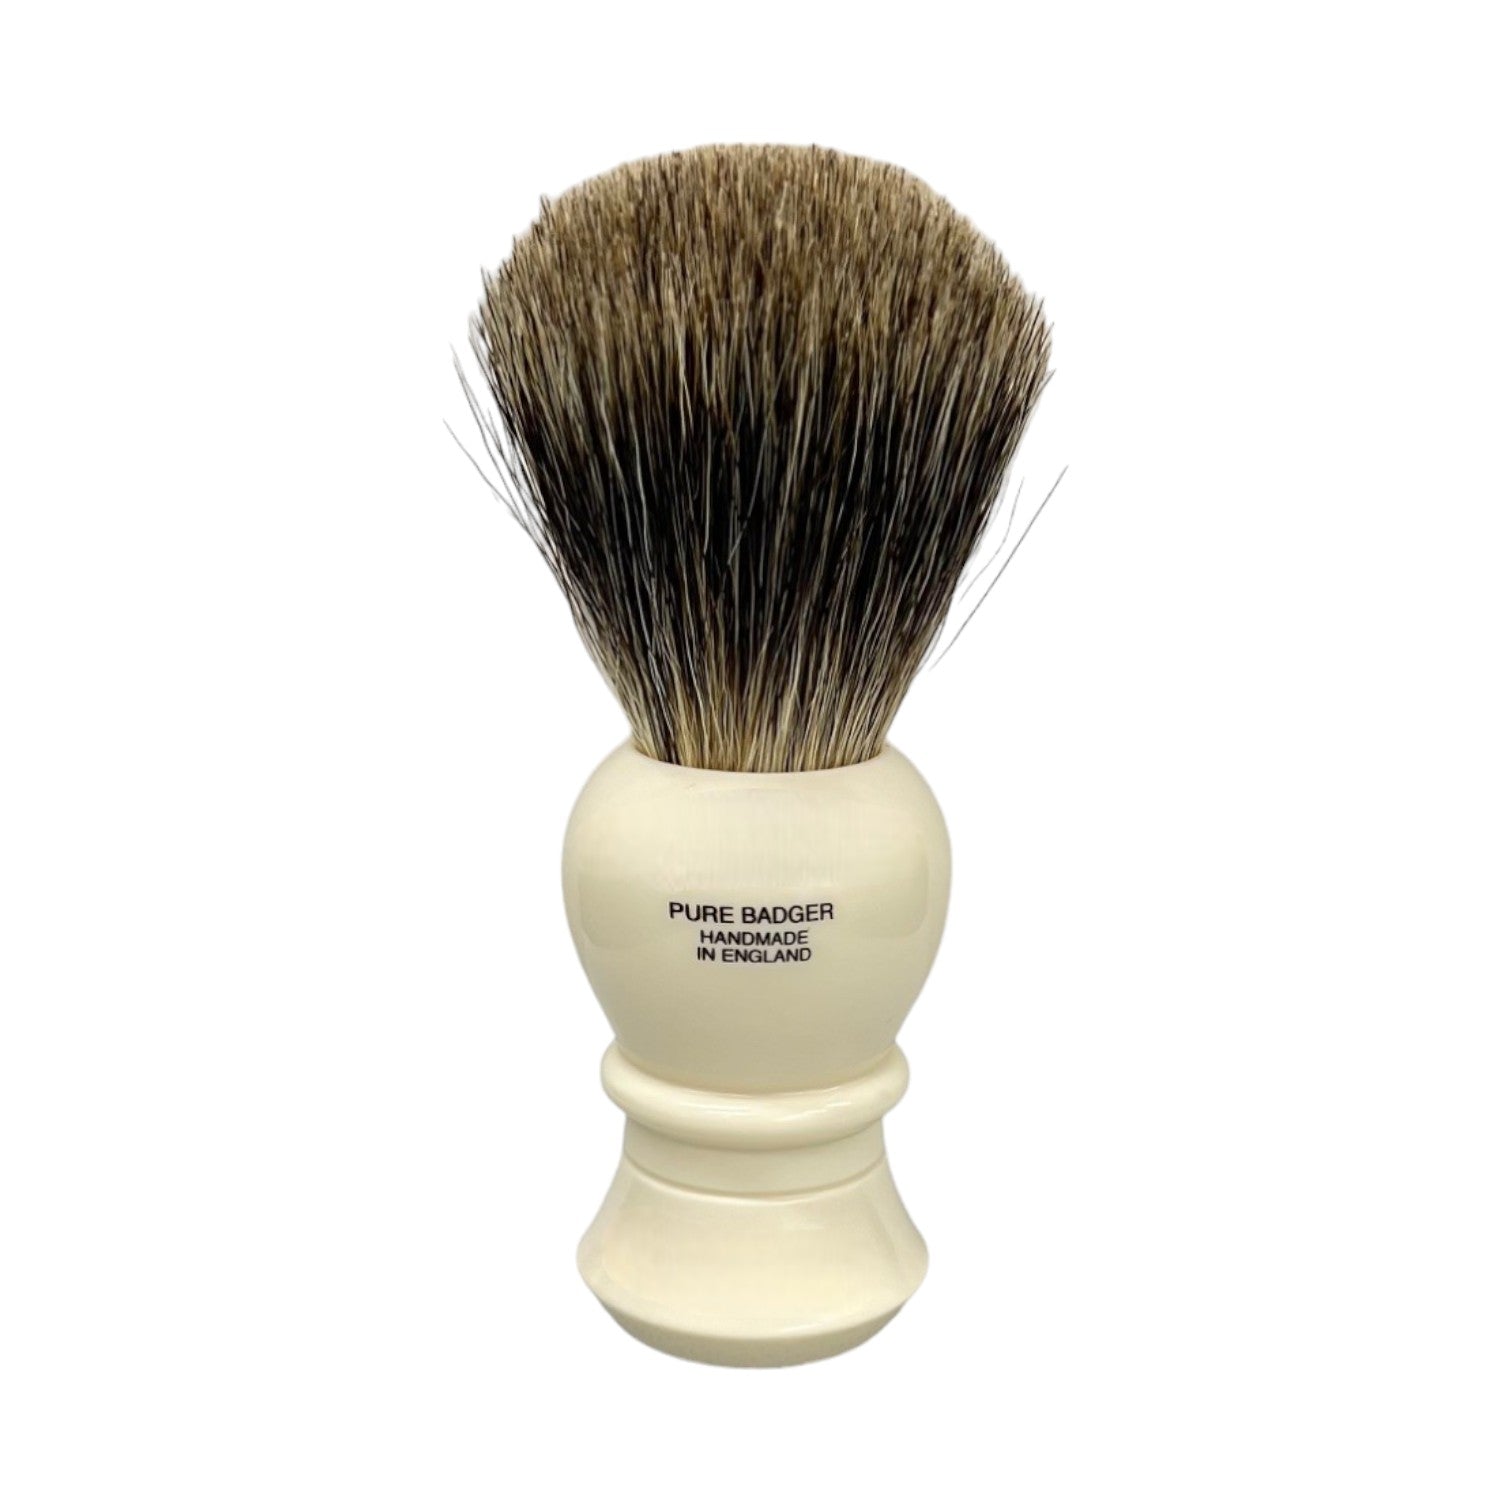 Cyril R. Salter Pure Badger Medium Shaving Brush